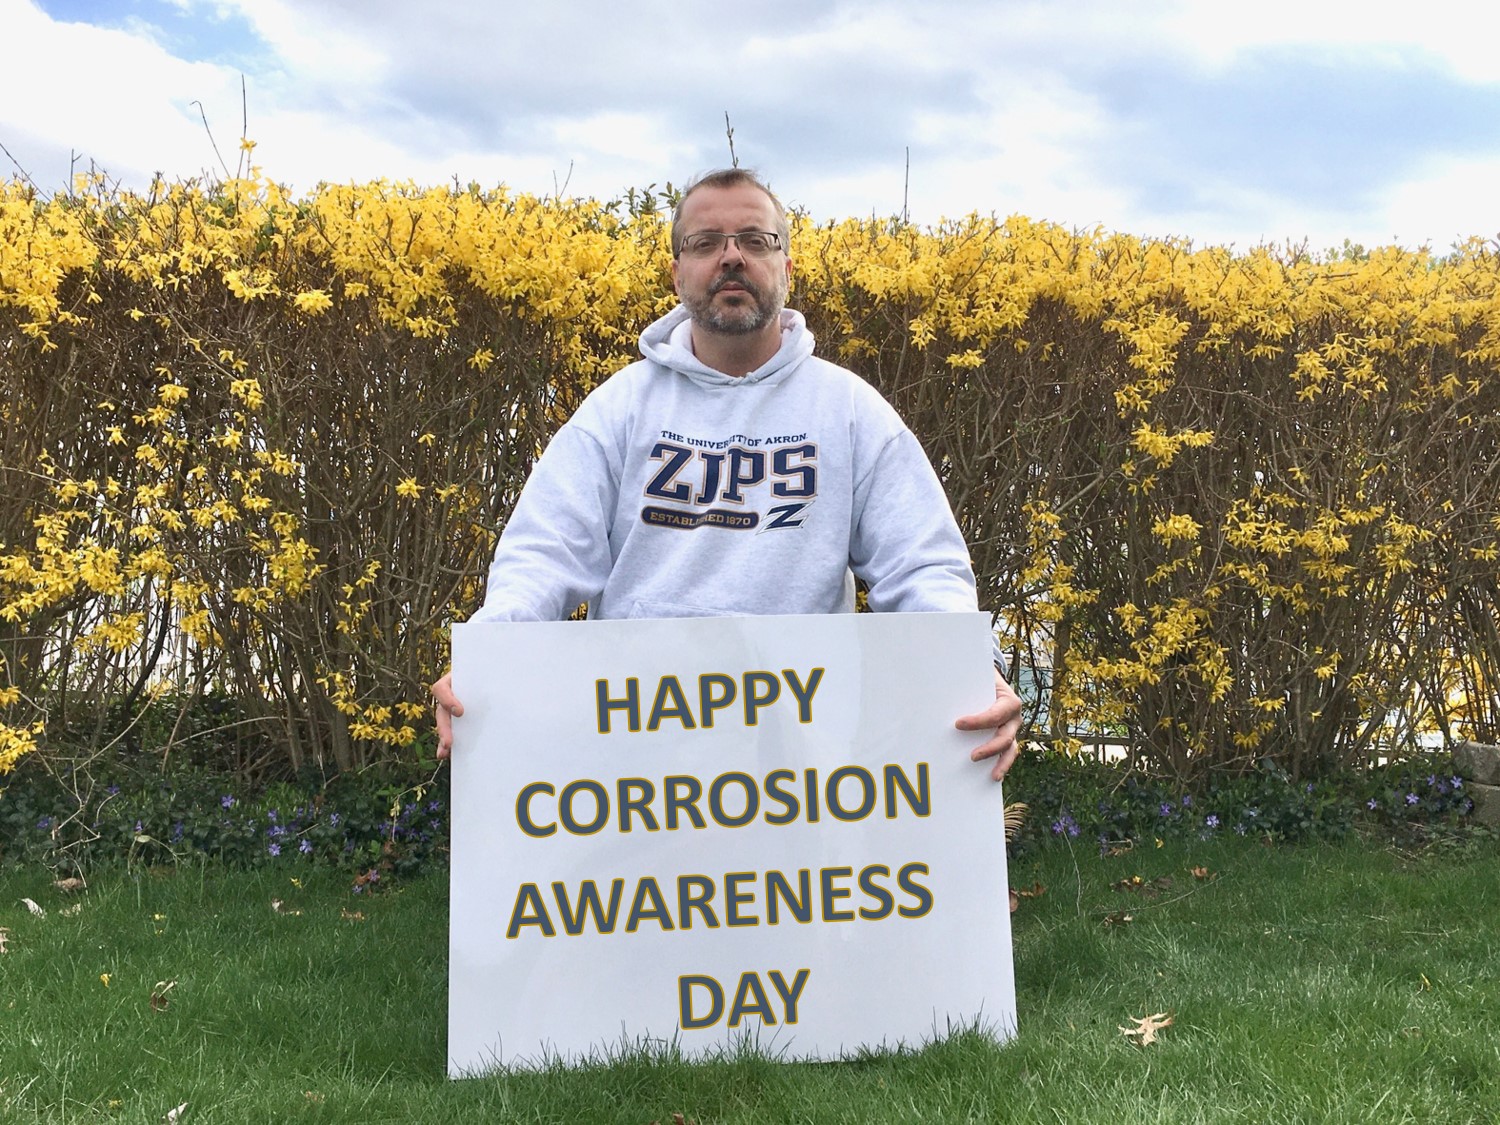 University of Akron professor, David Bastidas wishes a Happy Corrosion Awareness Day